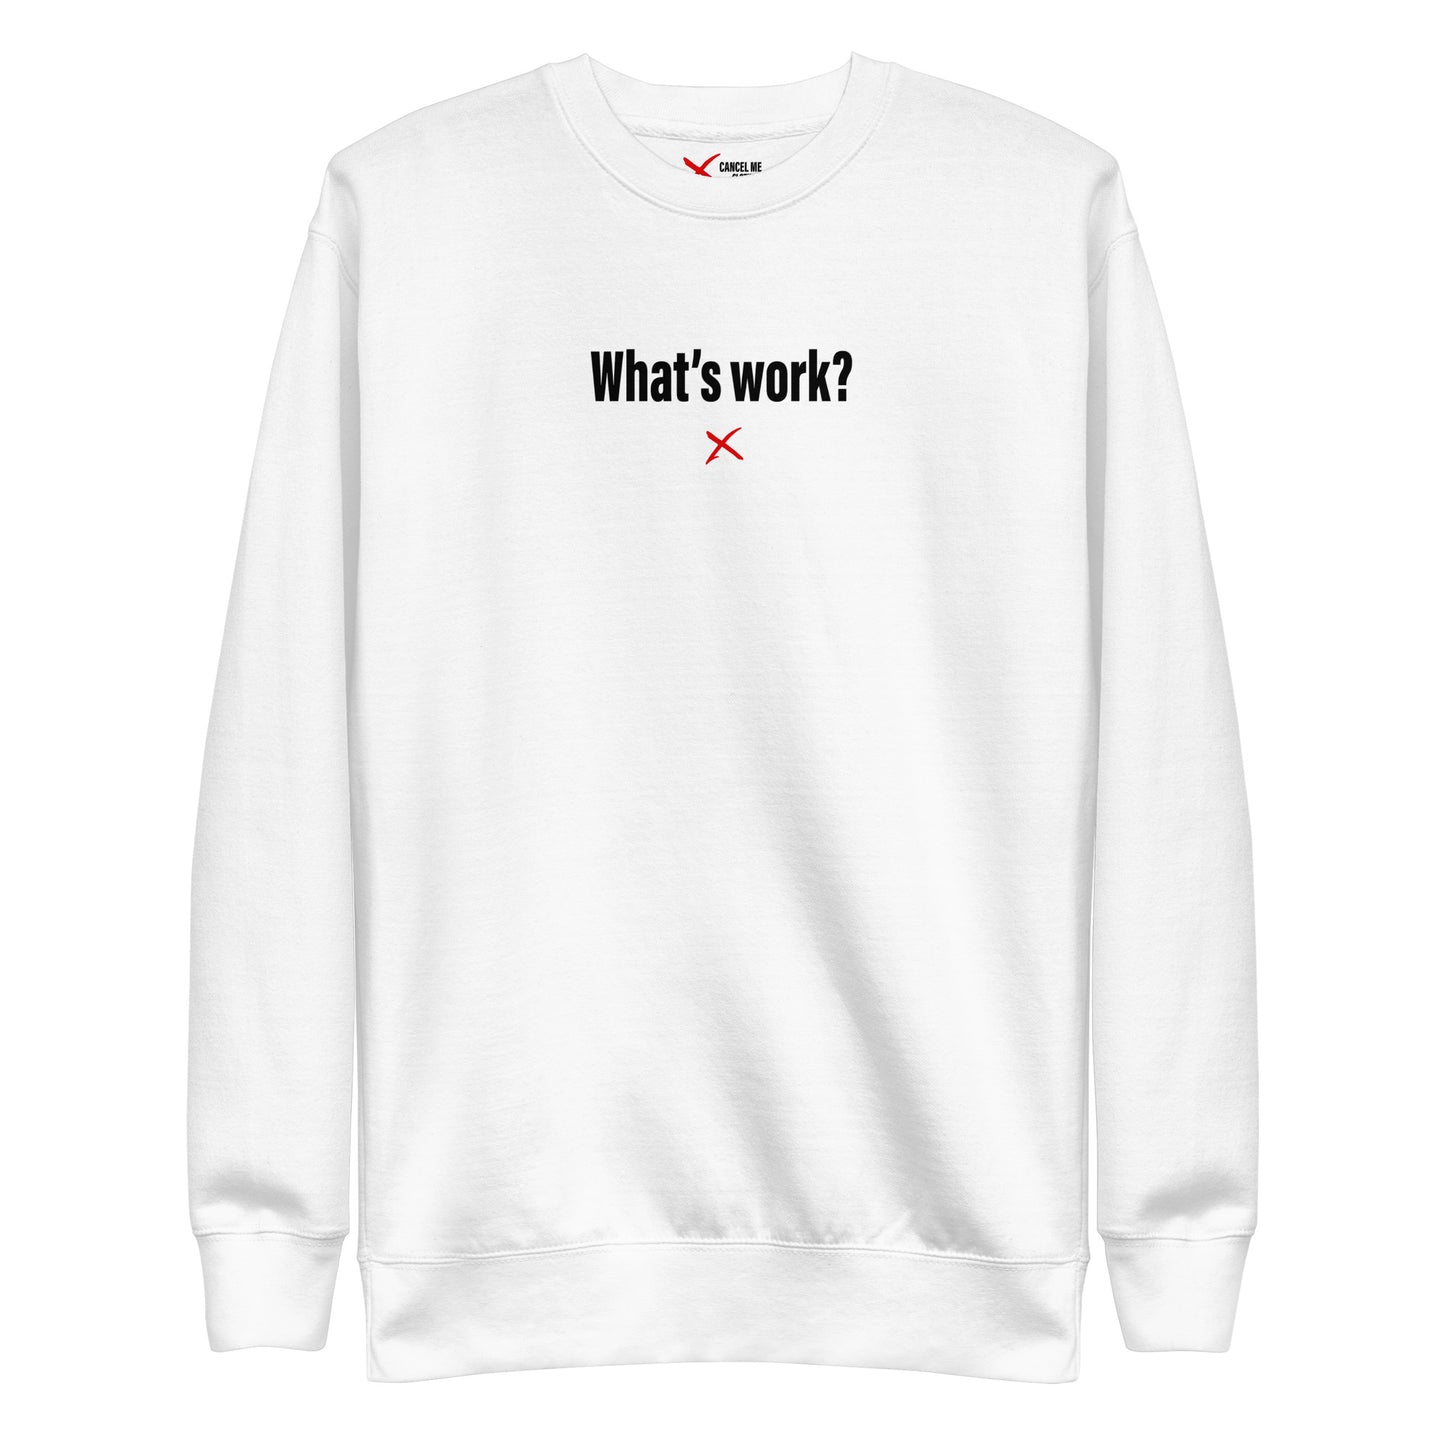 What's work? - Sweatshirt